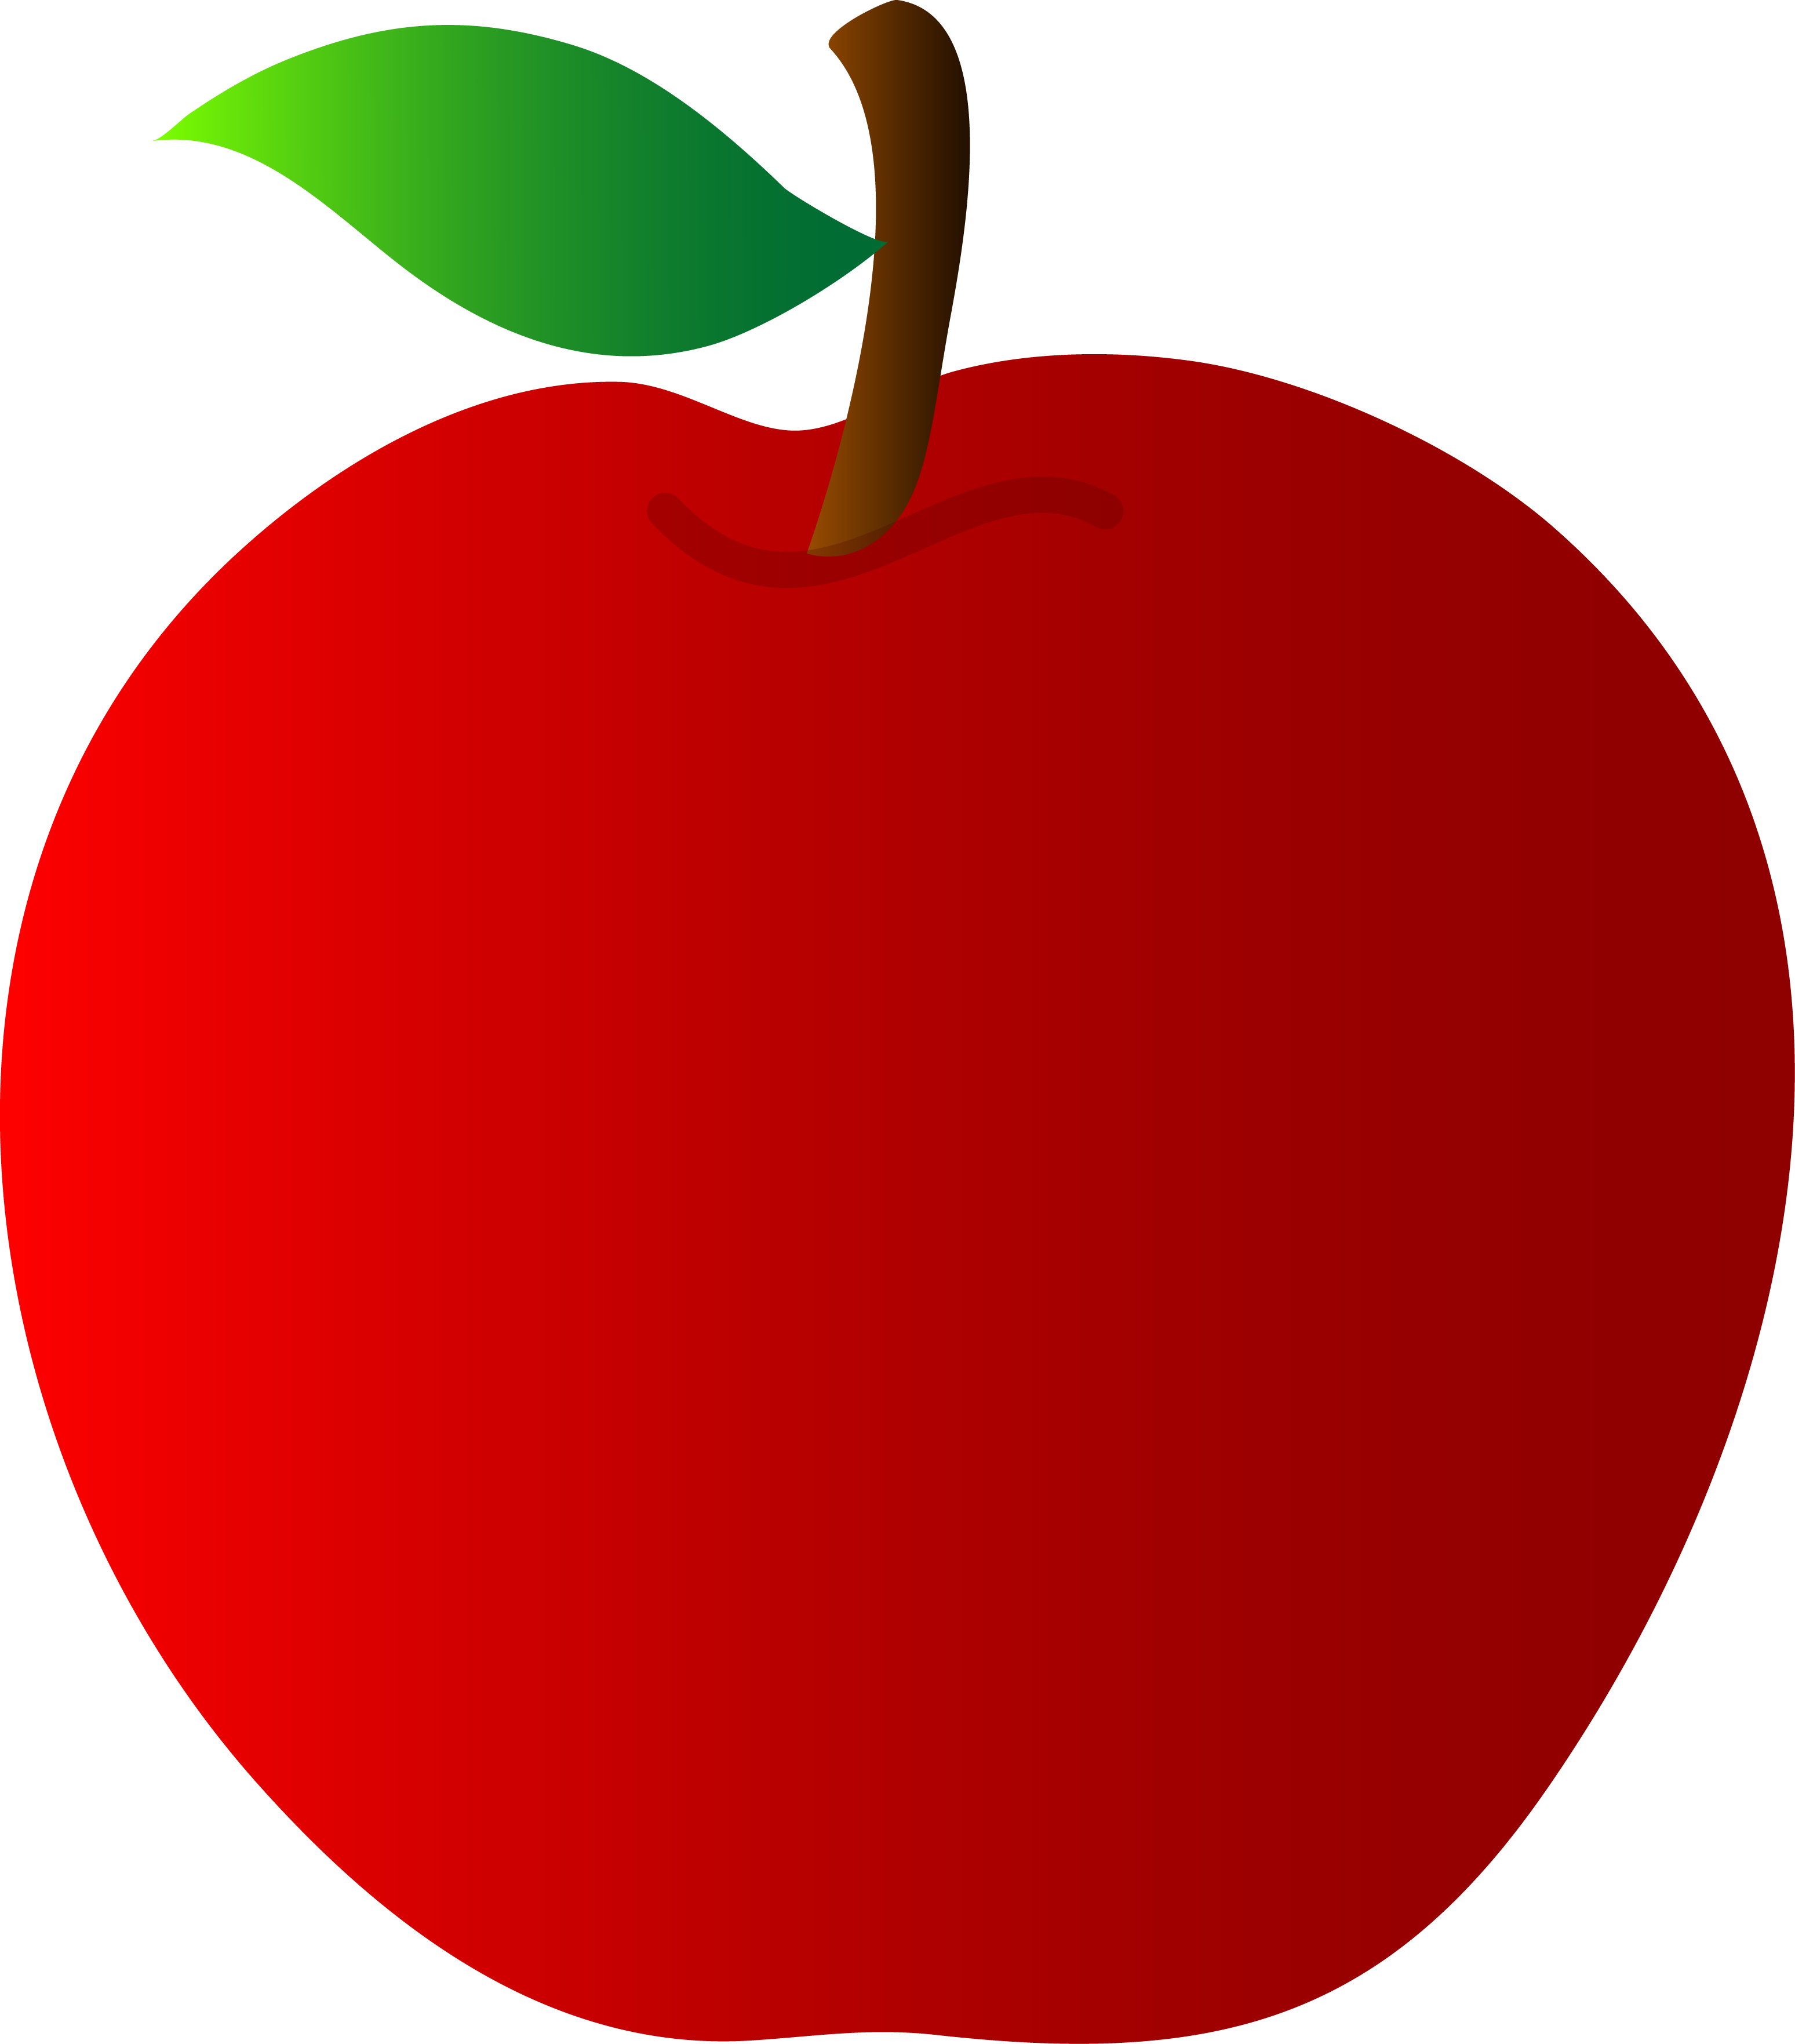 Fruit clipart apple